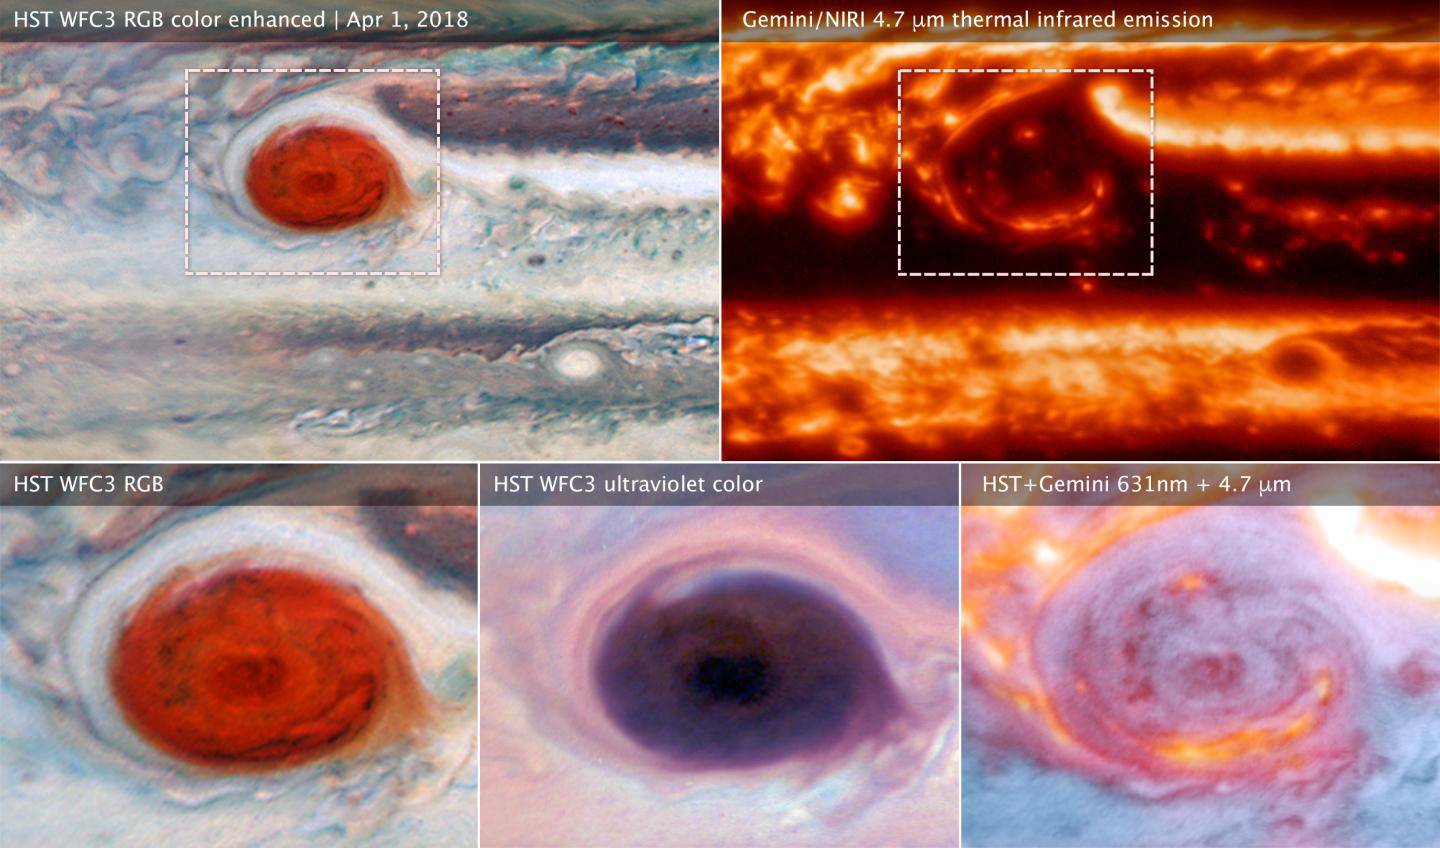 Images of Jupiter's Great Red Spot